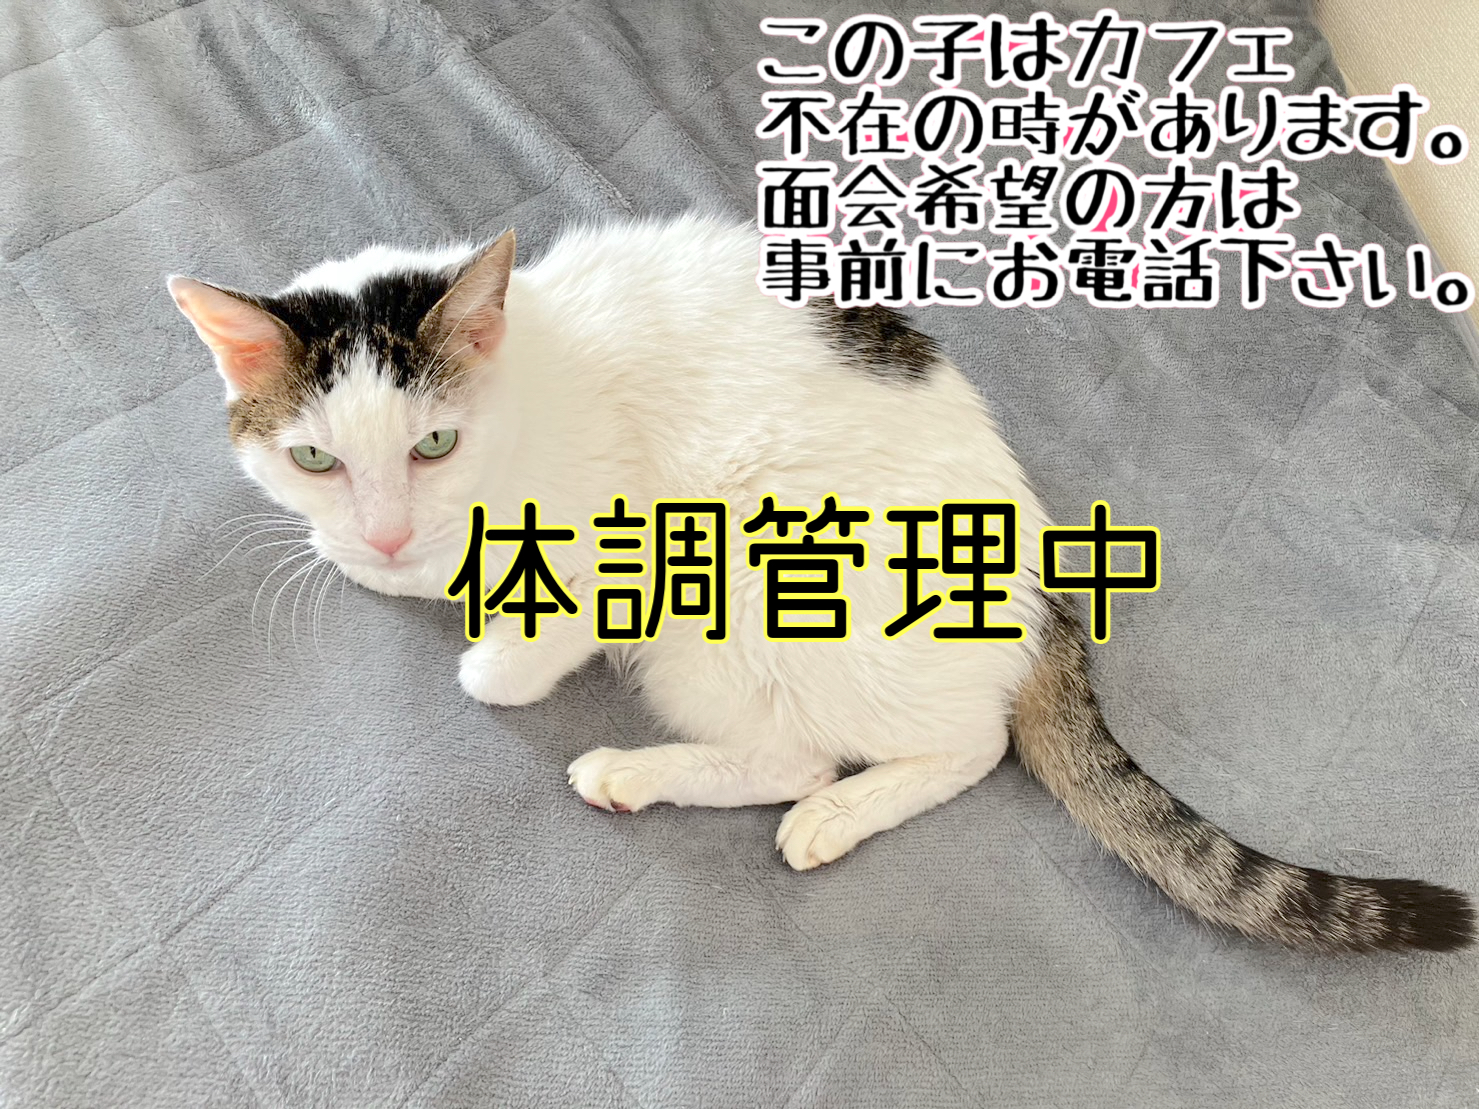 <ul>
<li>猫種：日本猫</li>
<li>名前（性別）：小太郎(男の子)</li>
<li>年齢：2010～2012年頃生まれ</li>
<li>保護経緯：飼い主が高齢になり逝去され飼育困難</li>
</ul>
